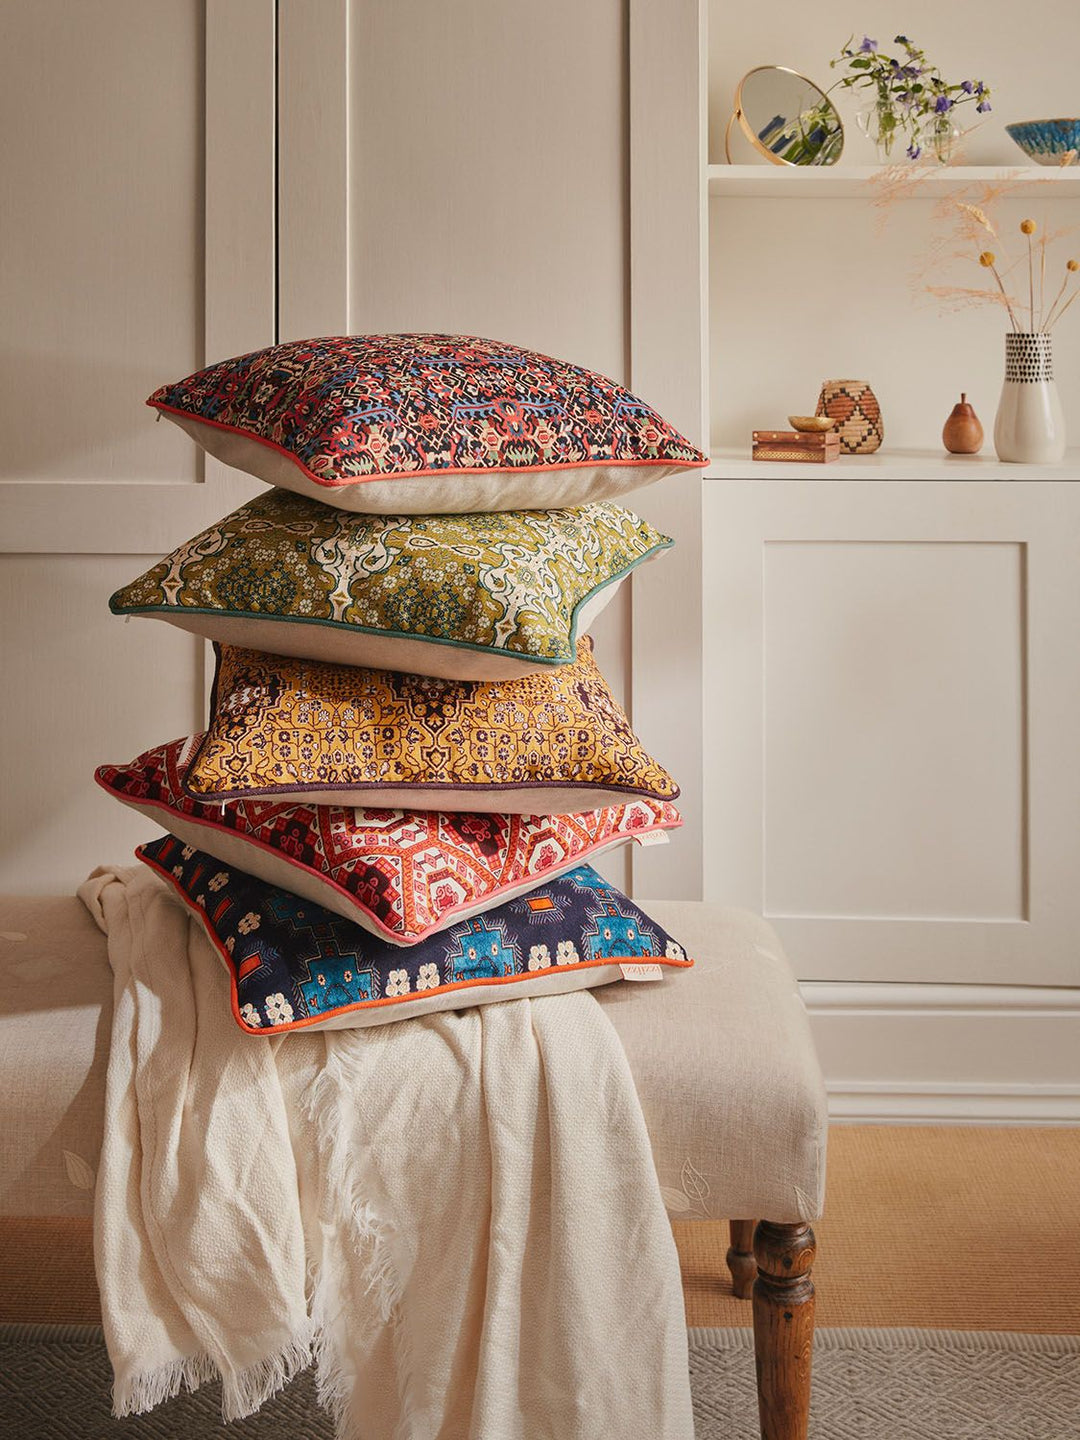 izziizzi-linen-cushions-geometric-astec-design-british-made-uk-designer-teal-orange-aztec-design-tile-pattern-moroccon